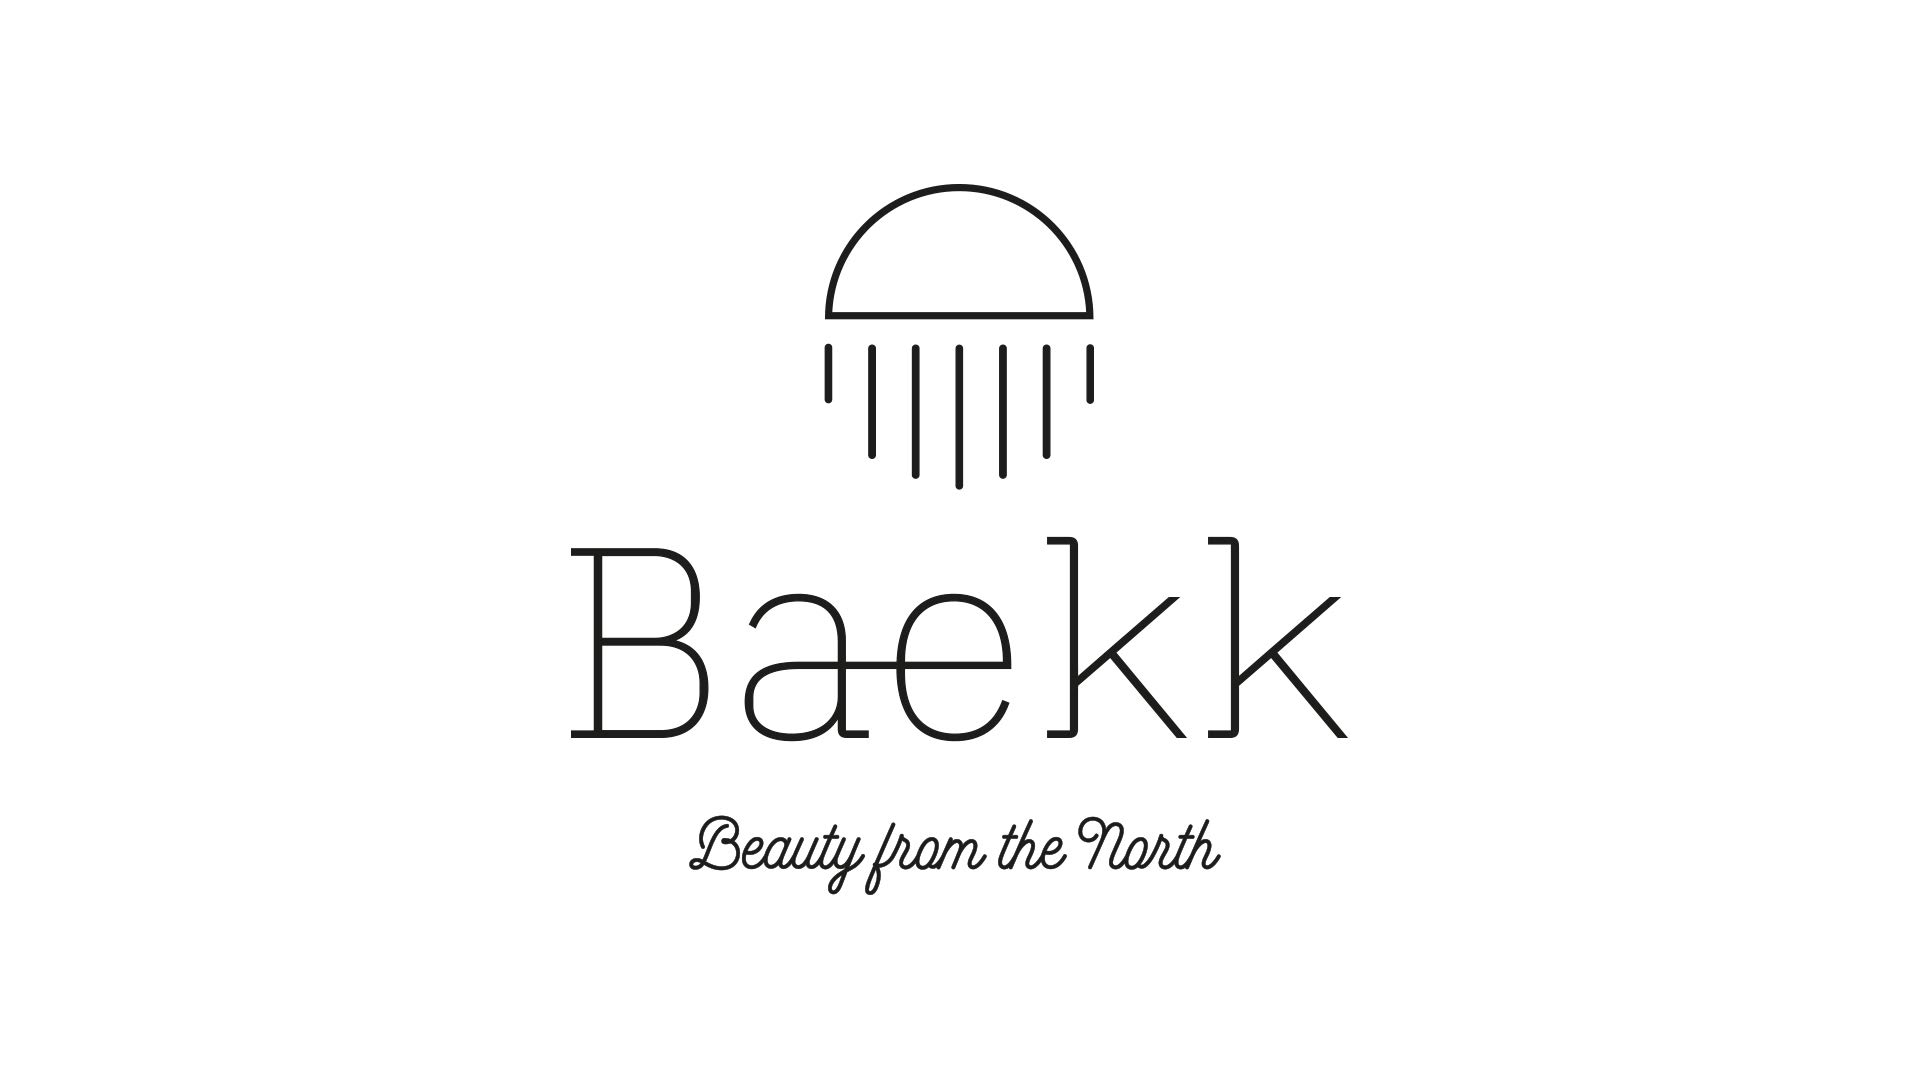 Baekk Beauty from the North